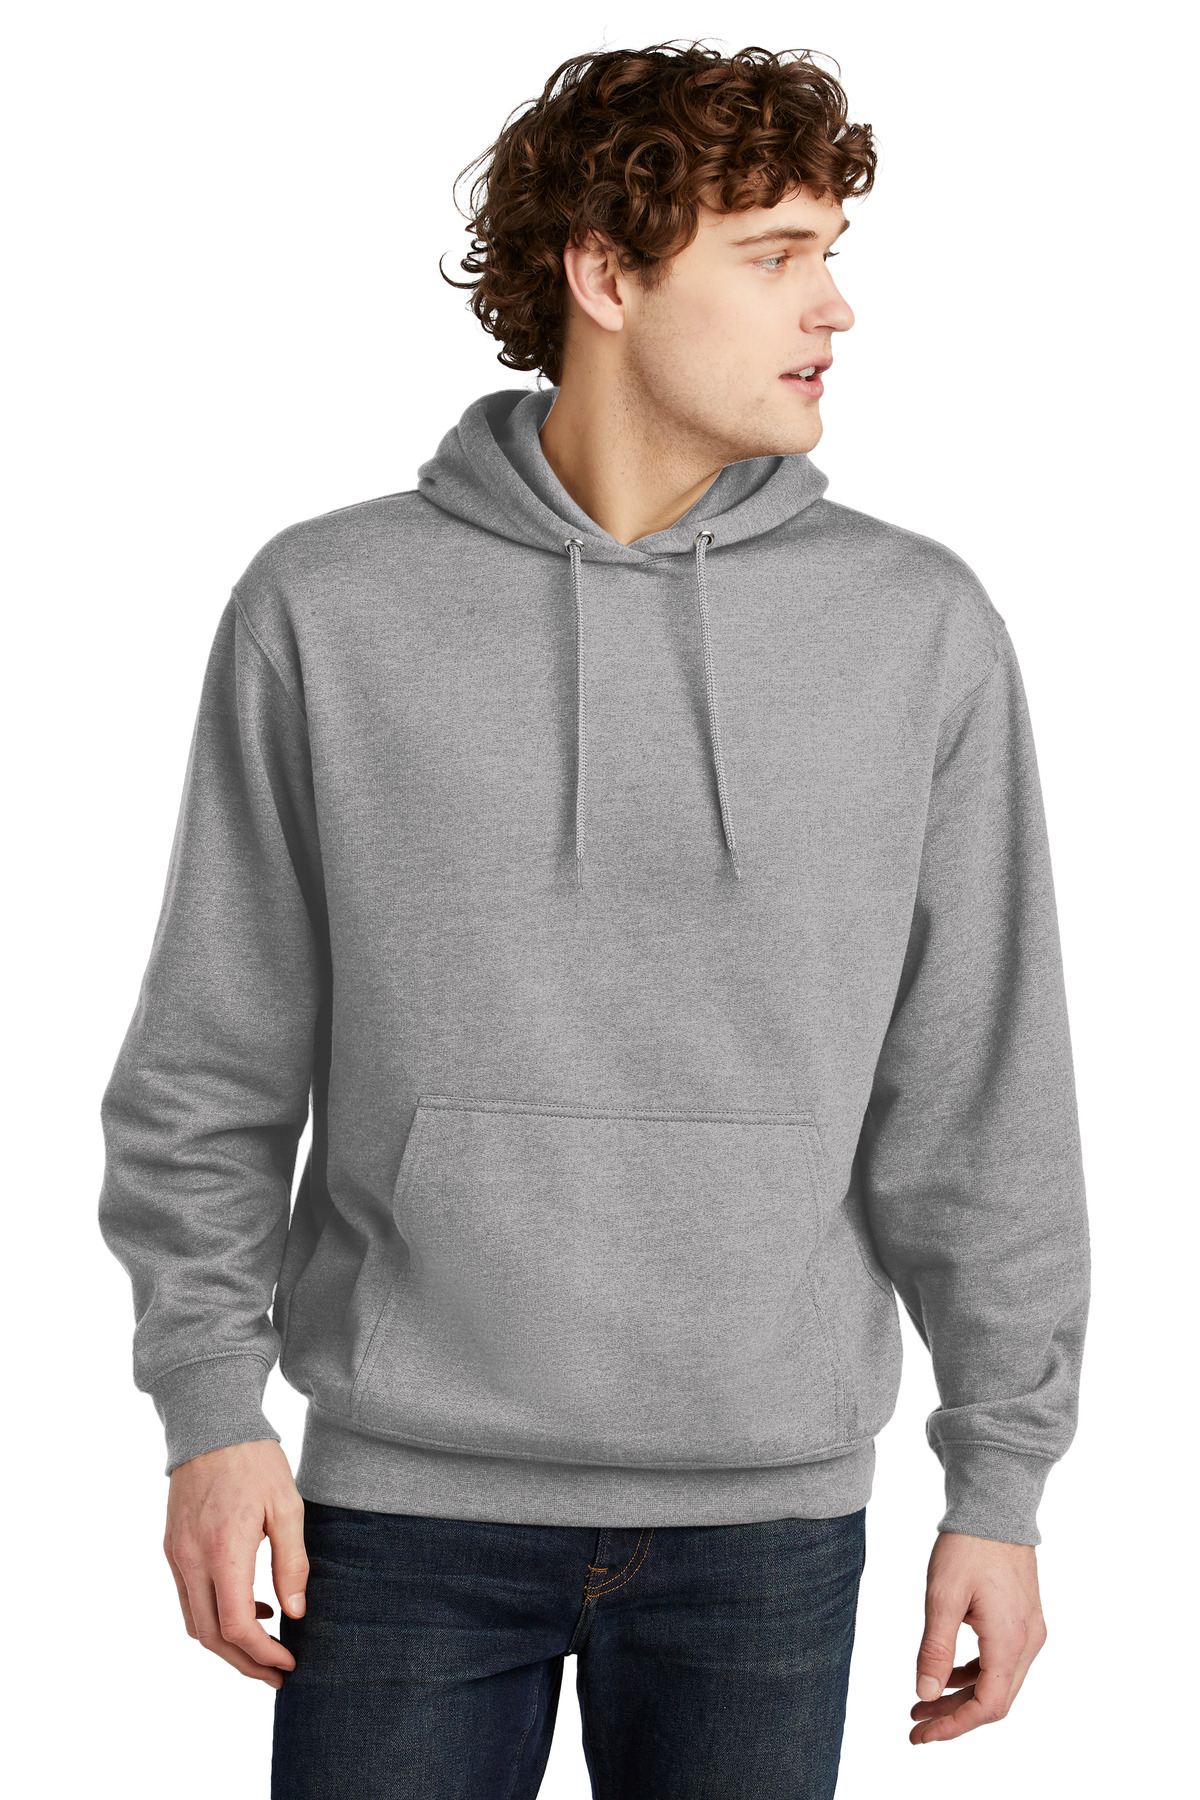 Port &#38; Company Fleece Pullover Hooded Sweatshirt-Port & Company